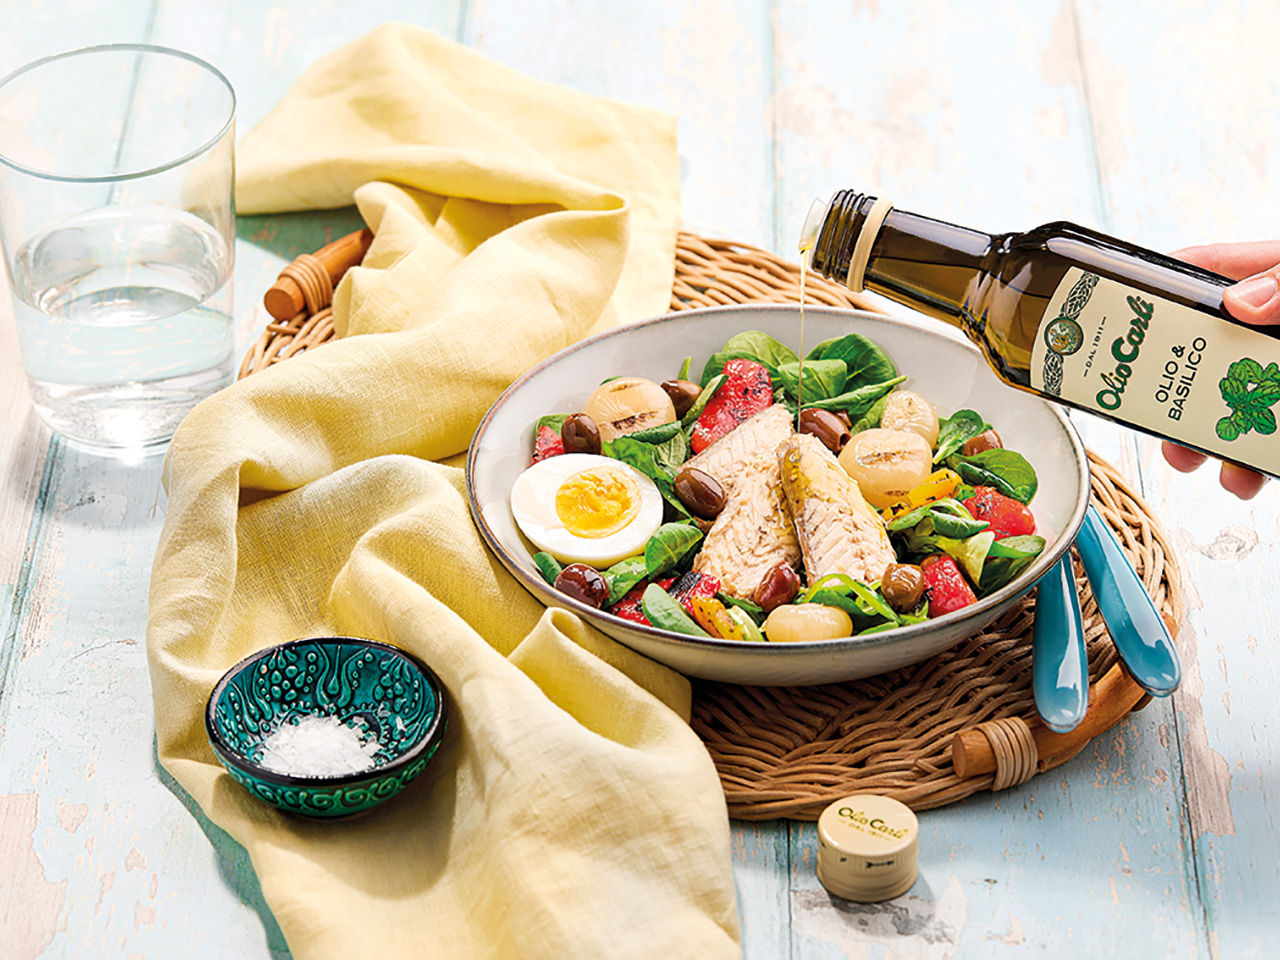 Salad, hard-boiled egg and mackerel